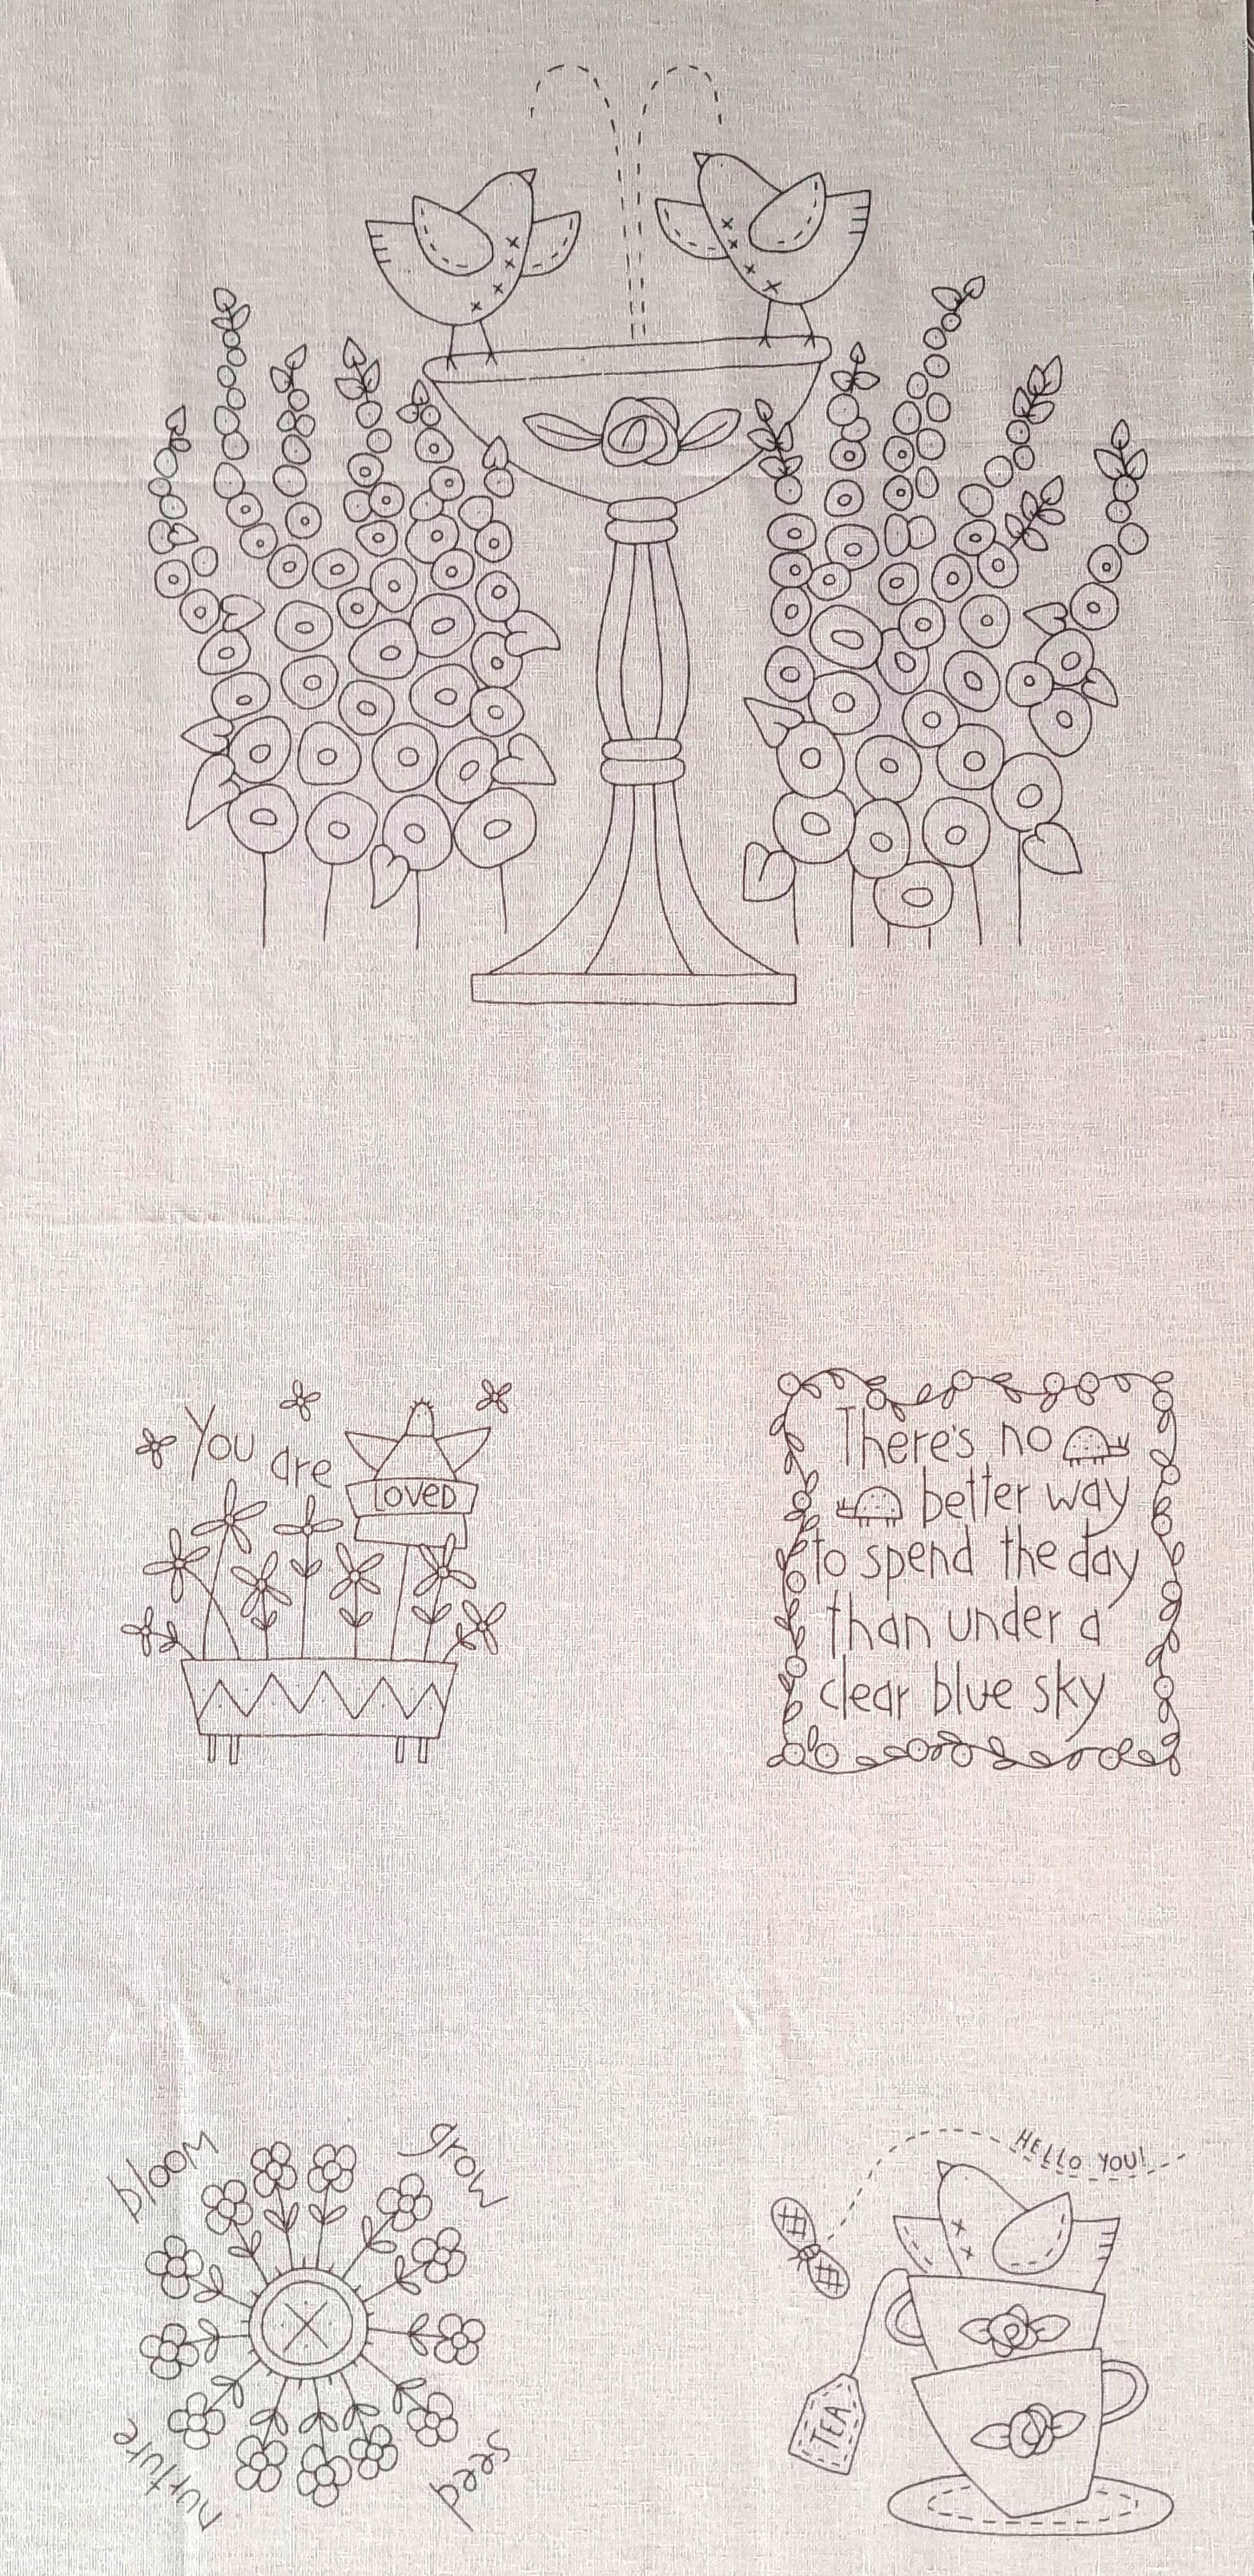 Blume and Grow preprinted stitchery embroidery panel Natalie Bird designs